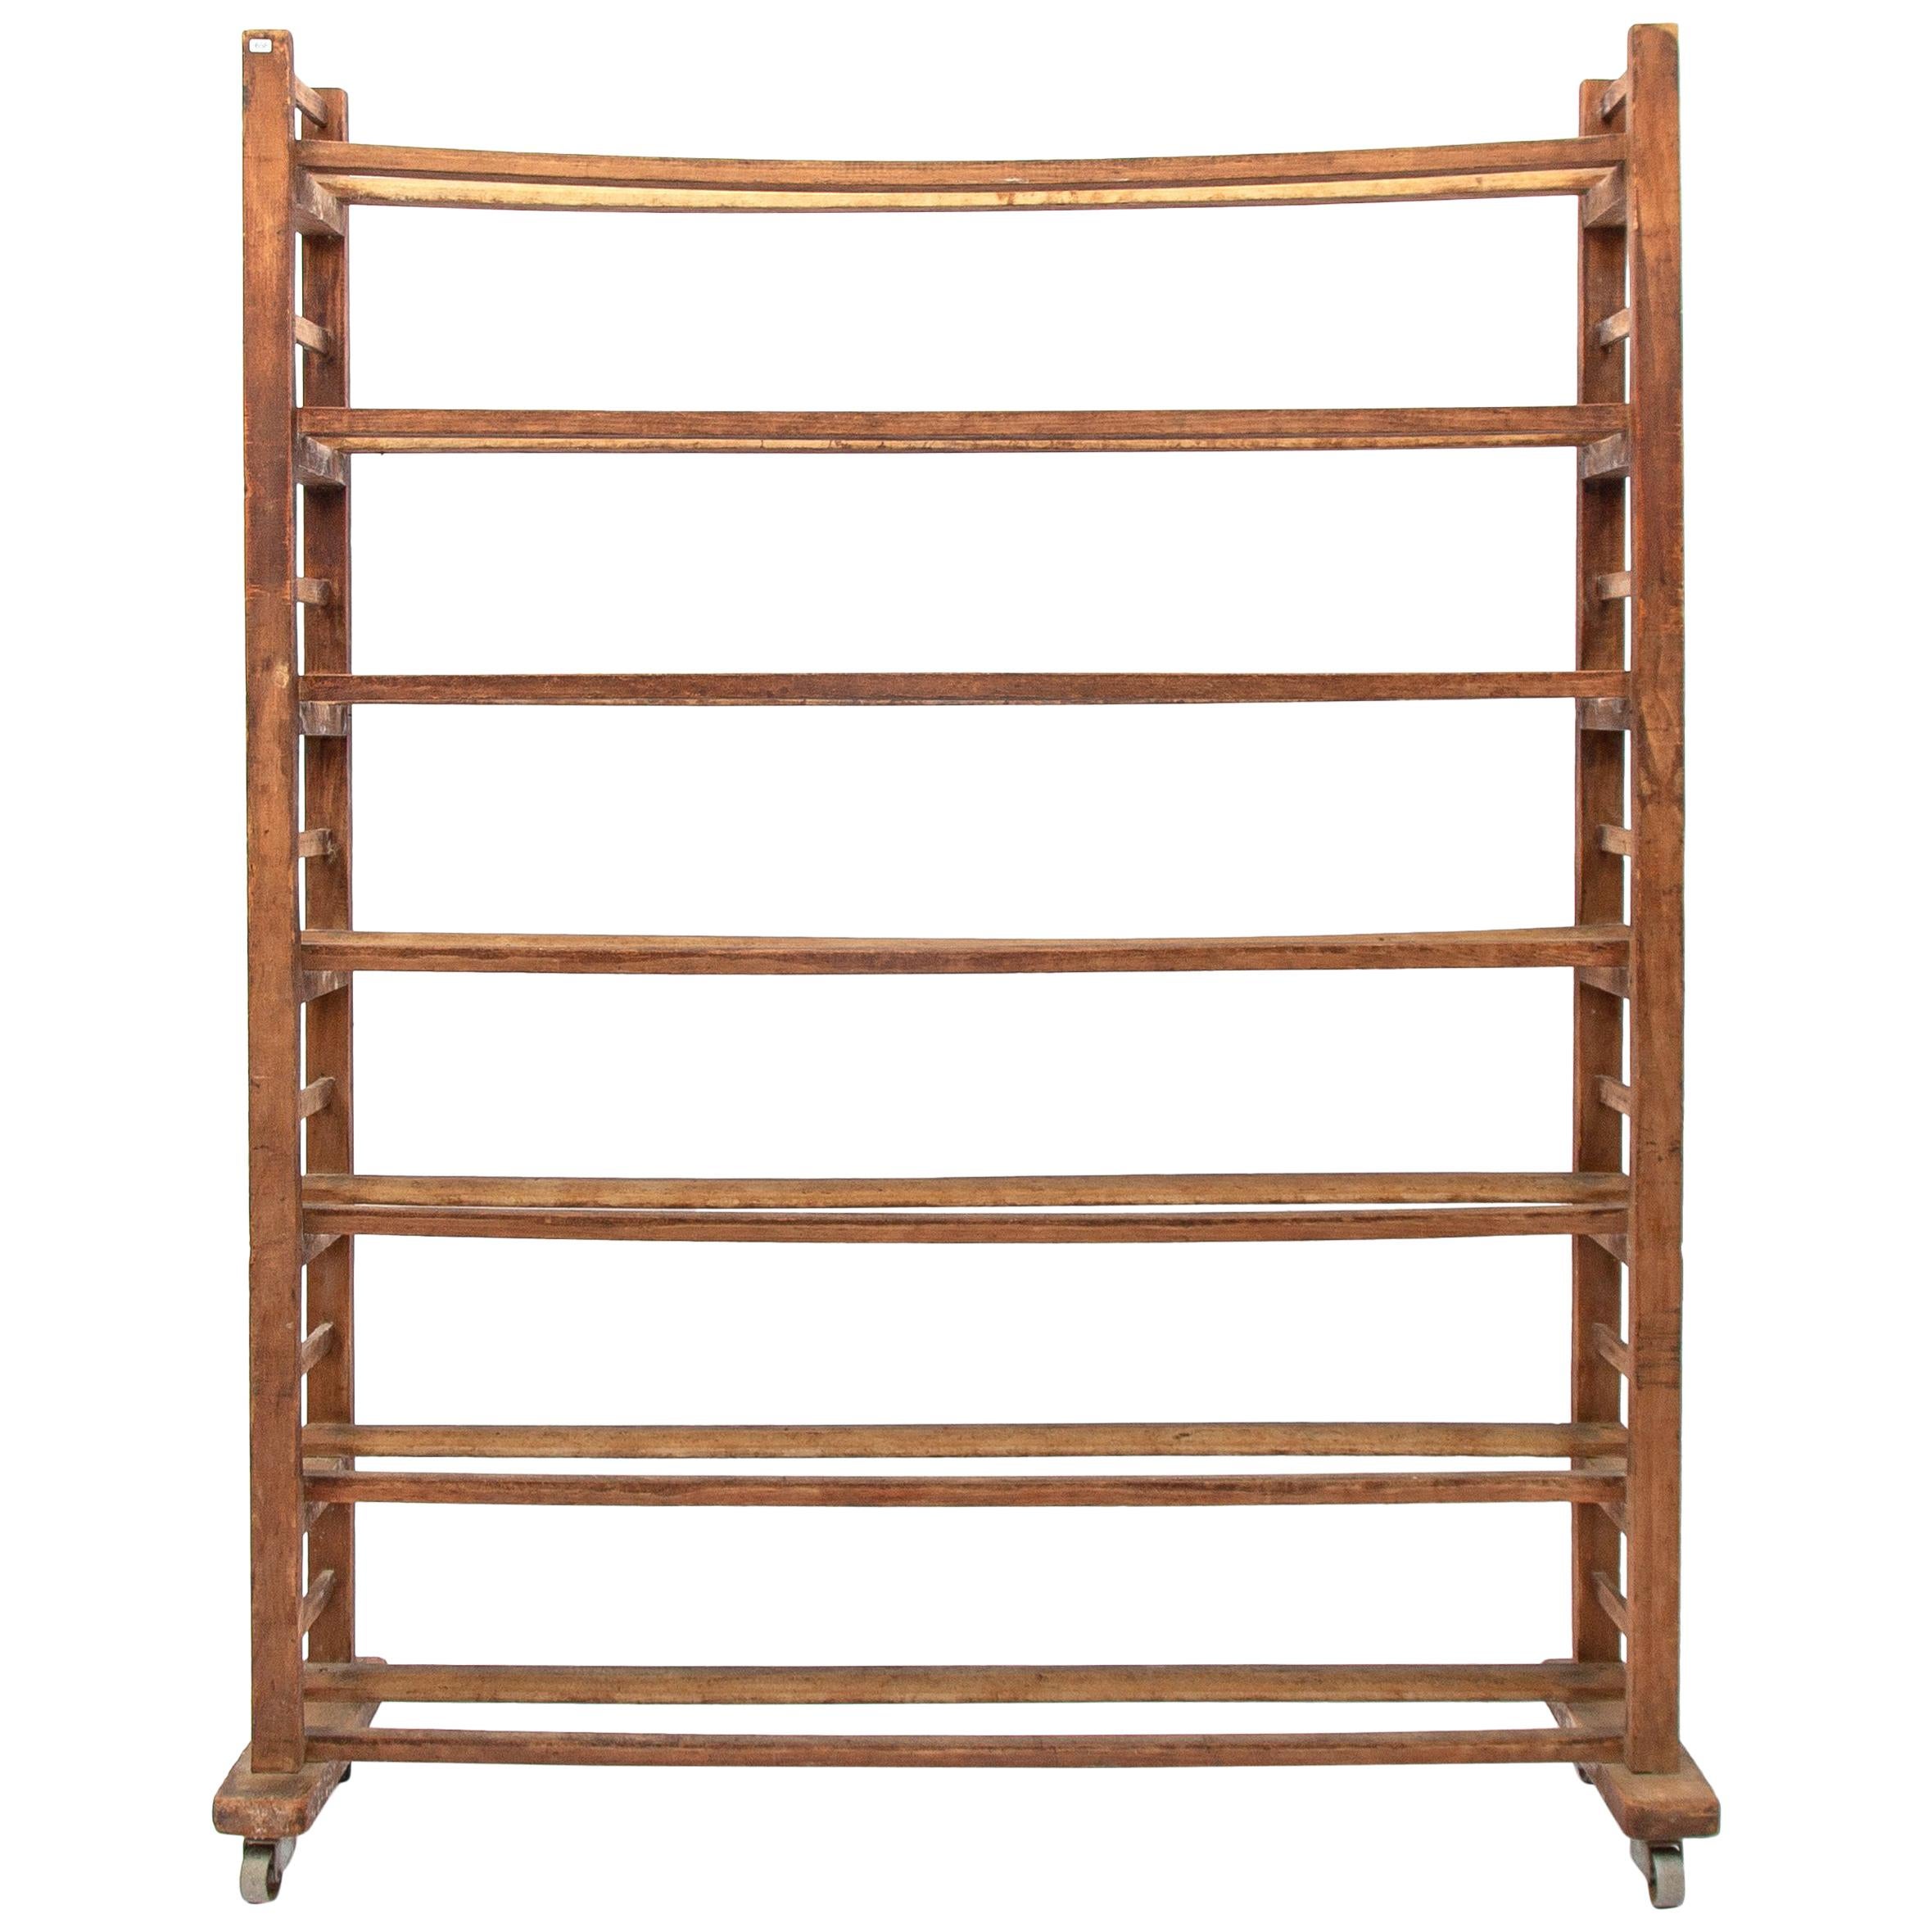 Original Dutch 20th Century Decorative Wooden Seven Shelf Bread Rack